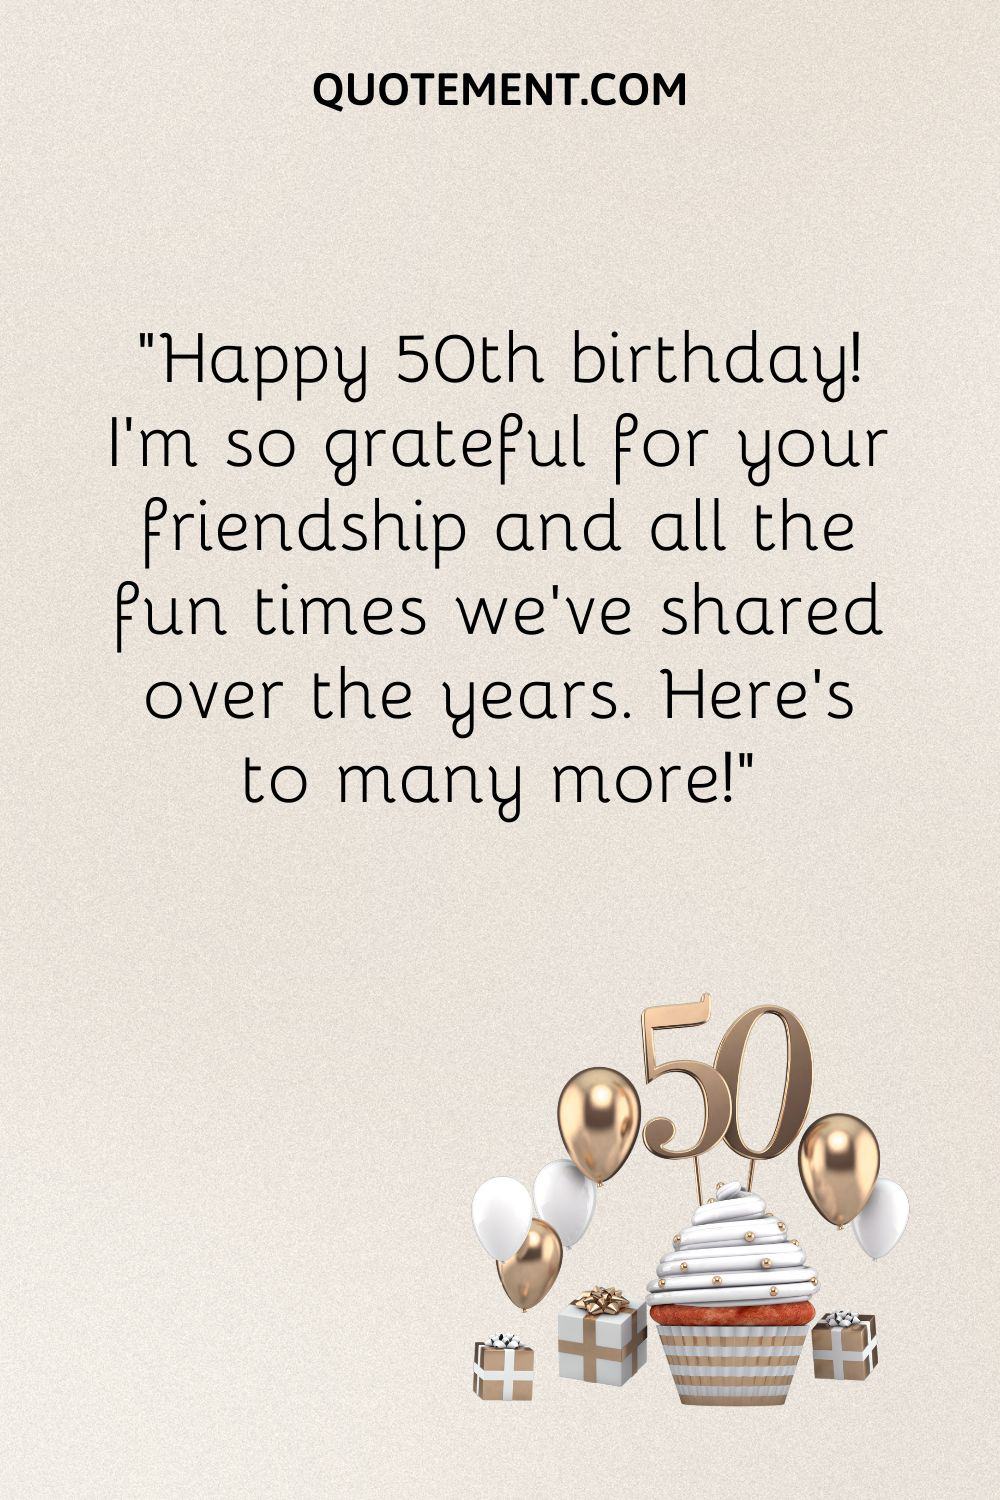 50th birthday wish